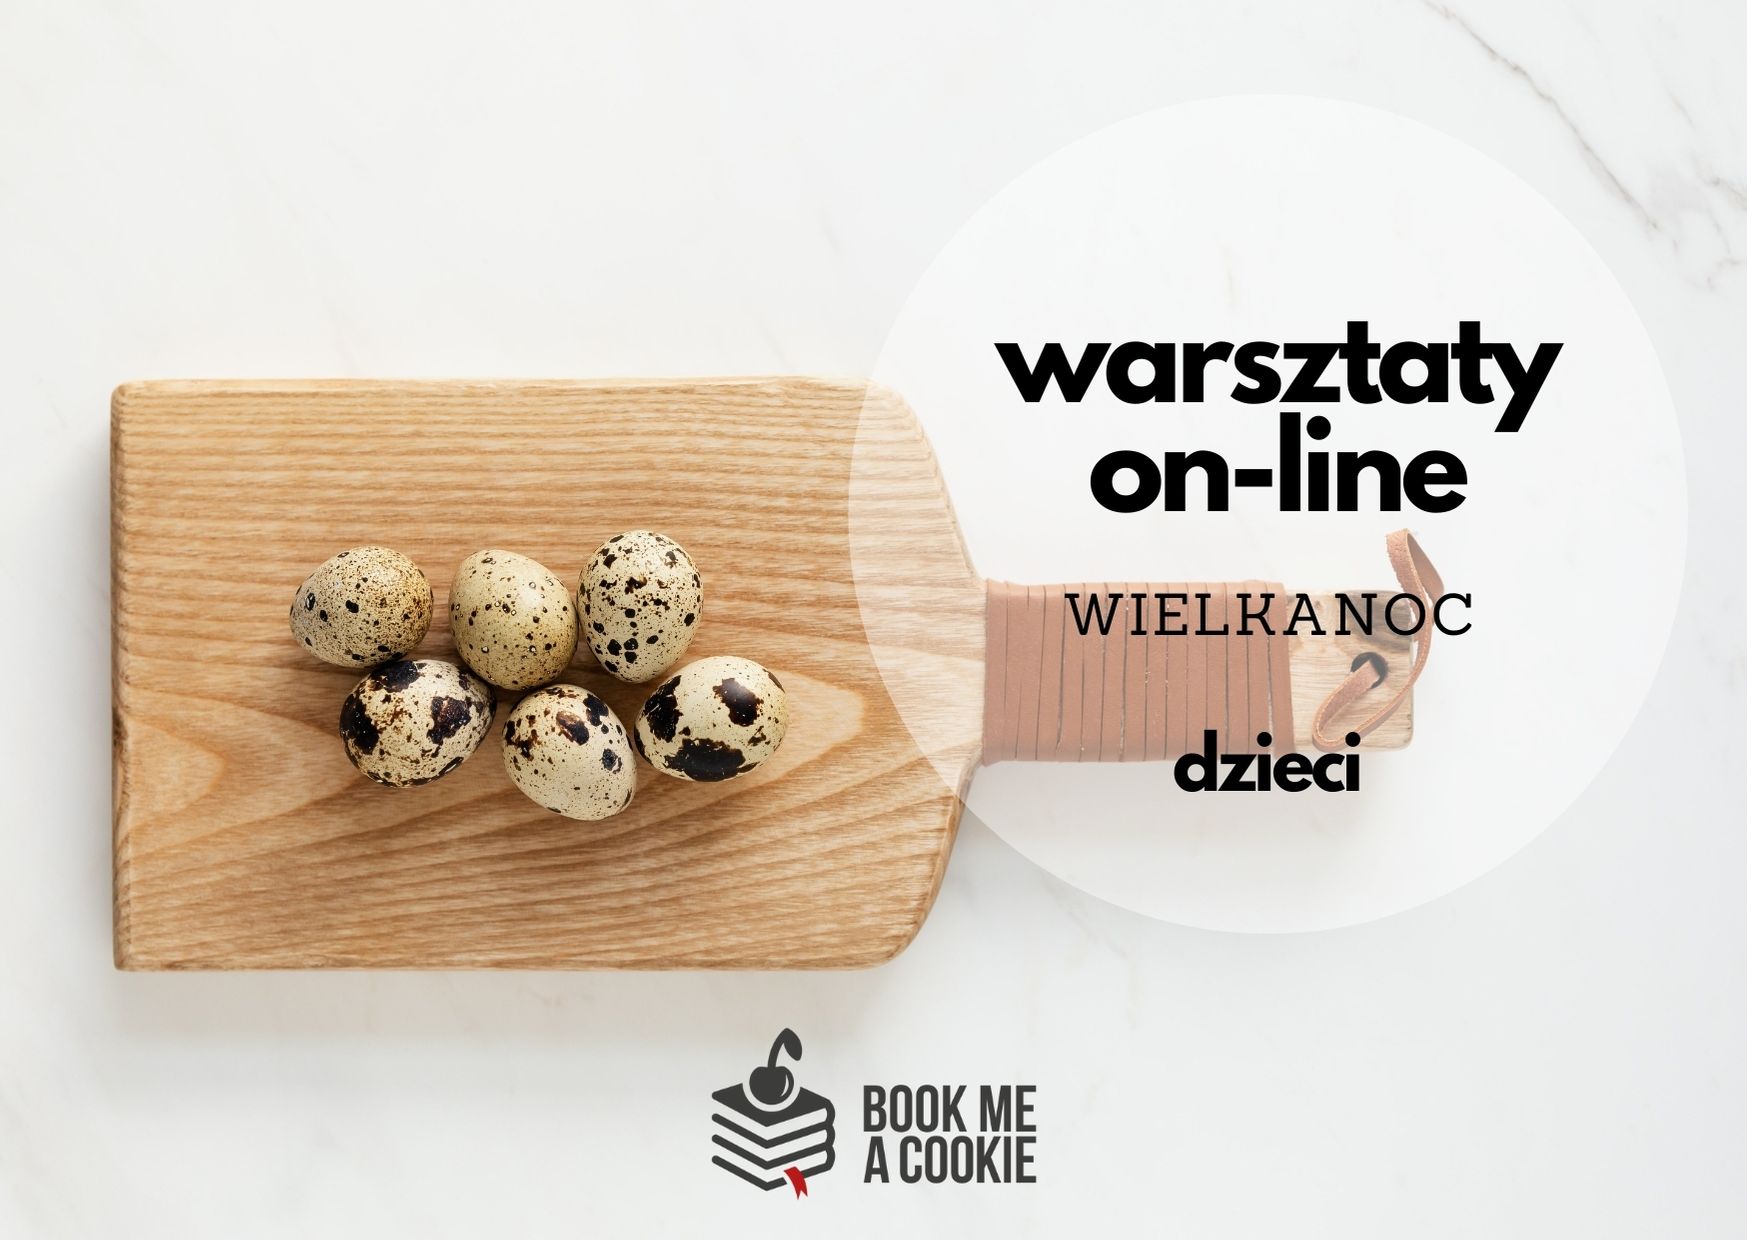 Warsztaty kulinarne ON-LINE: Wielkanoc last-minute